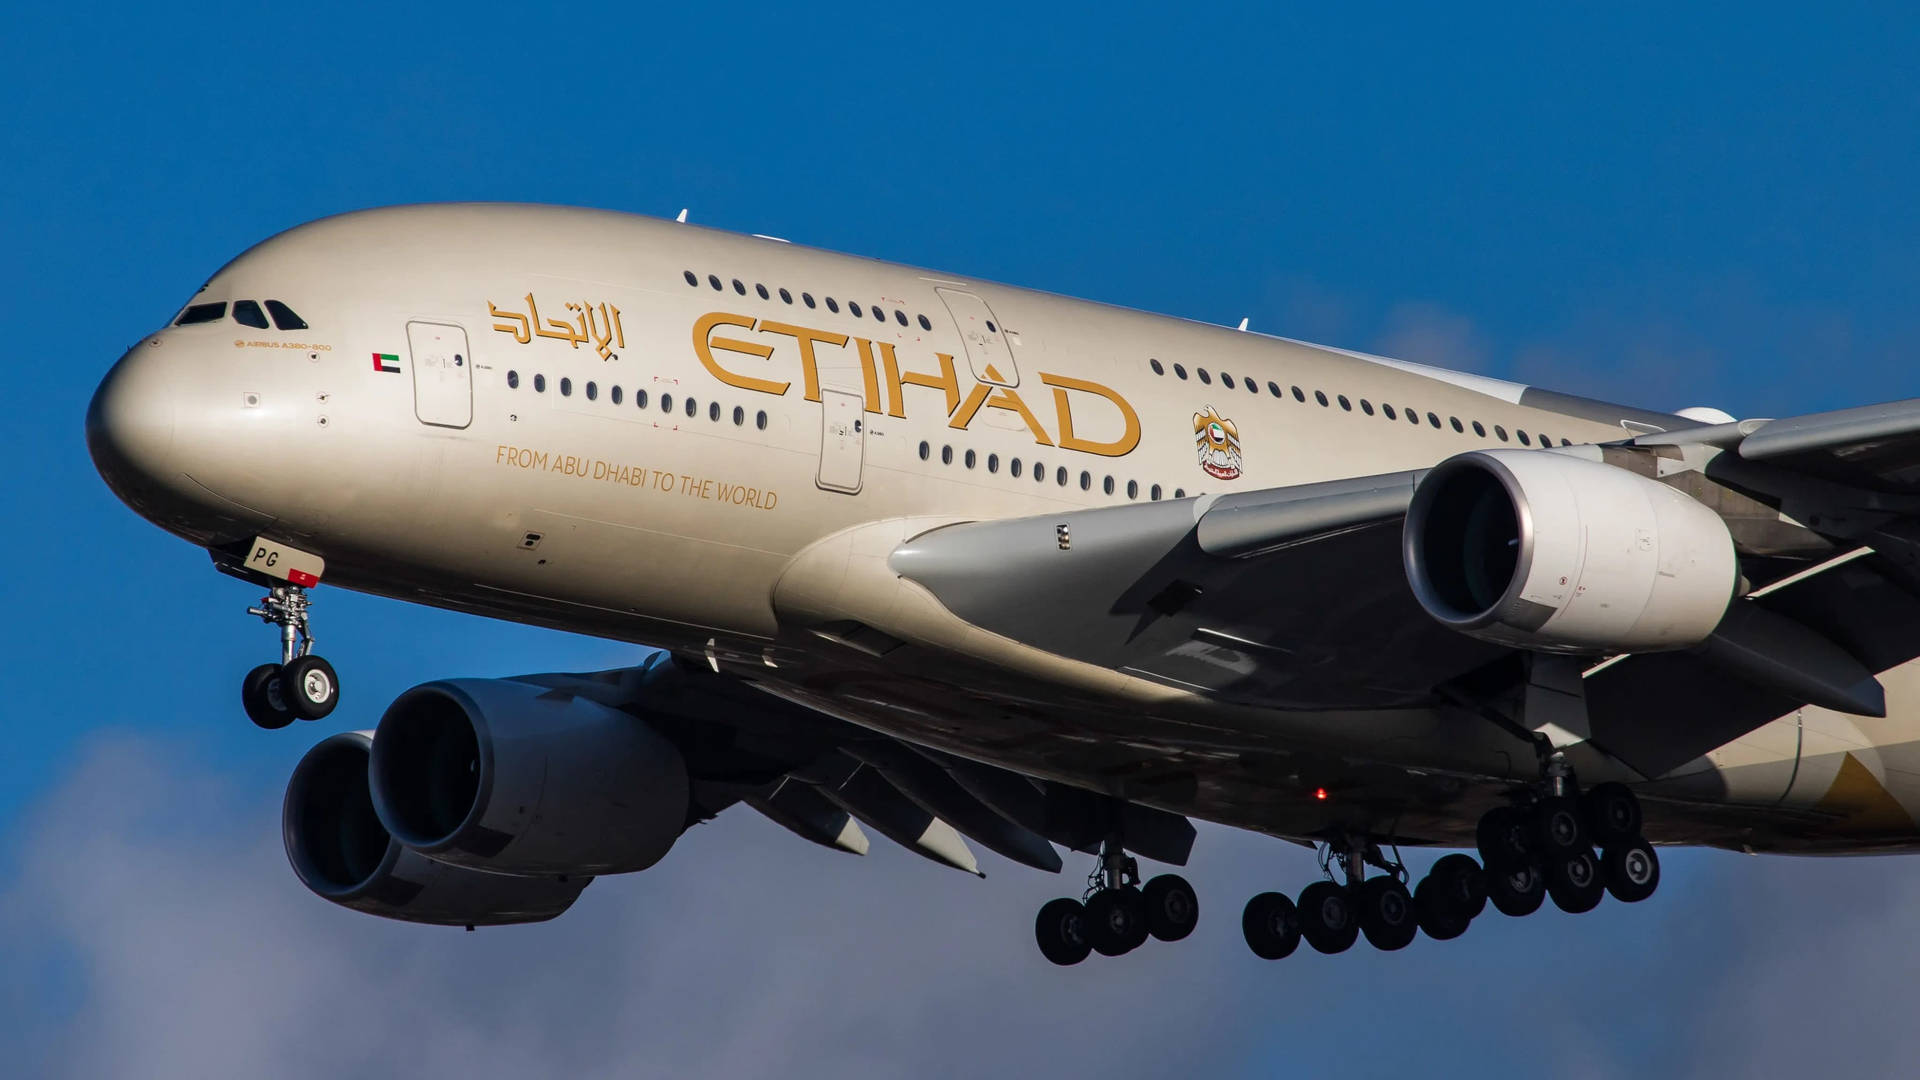 Caption: Etihad Airways Plane Soaring in the Sky Wallpaper